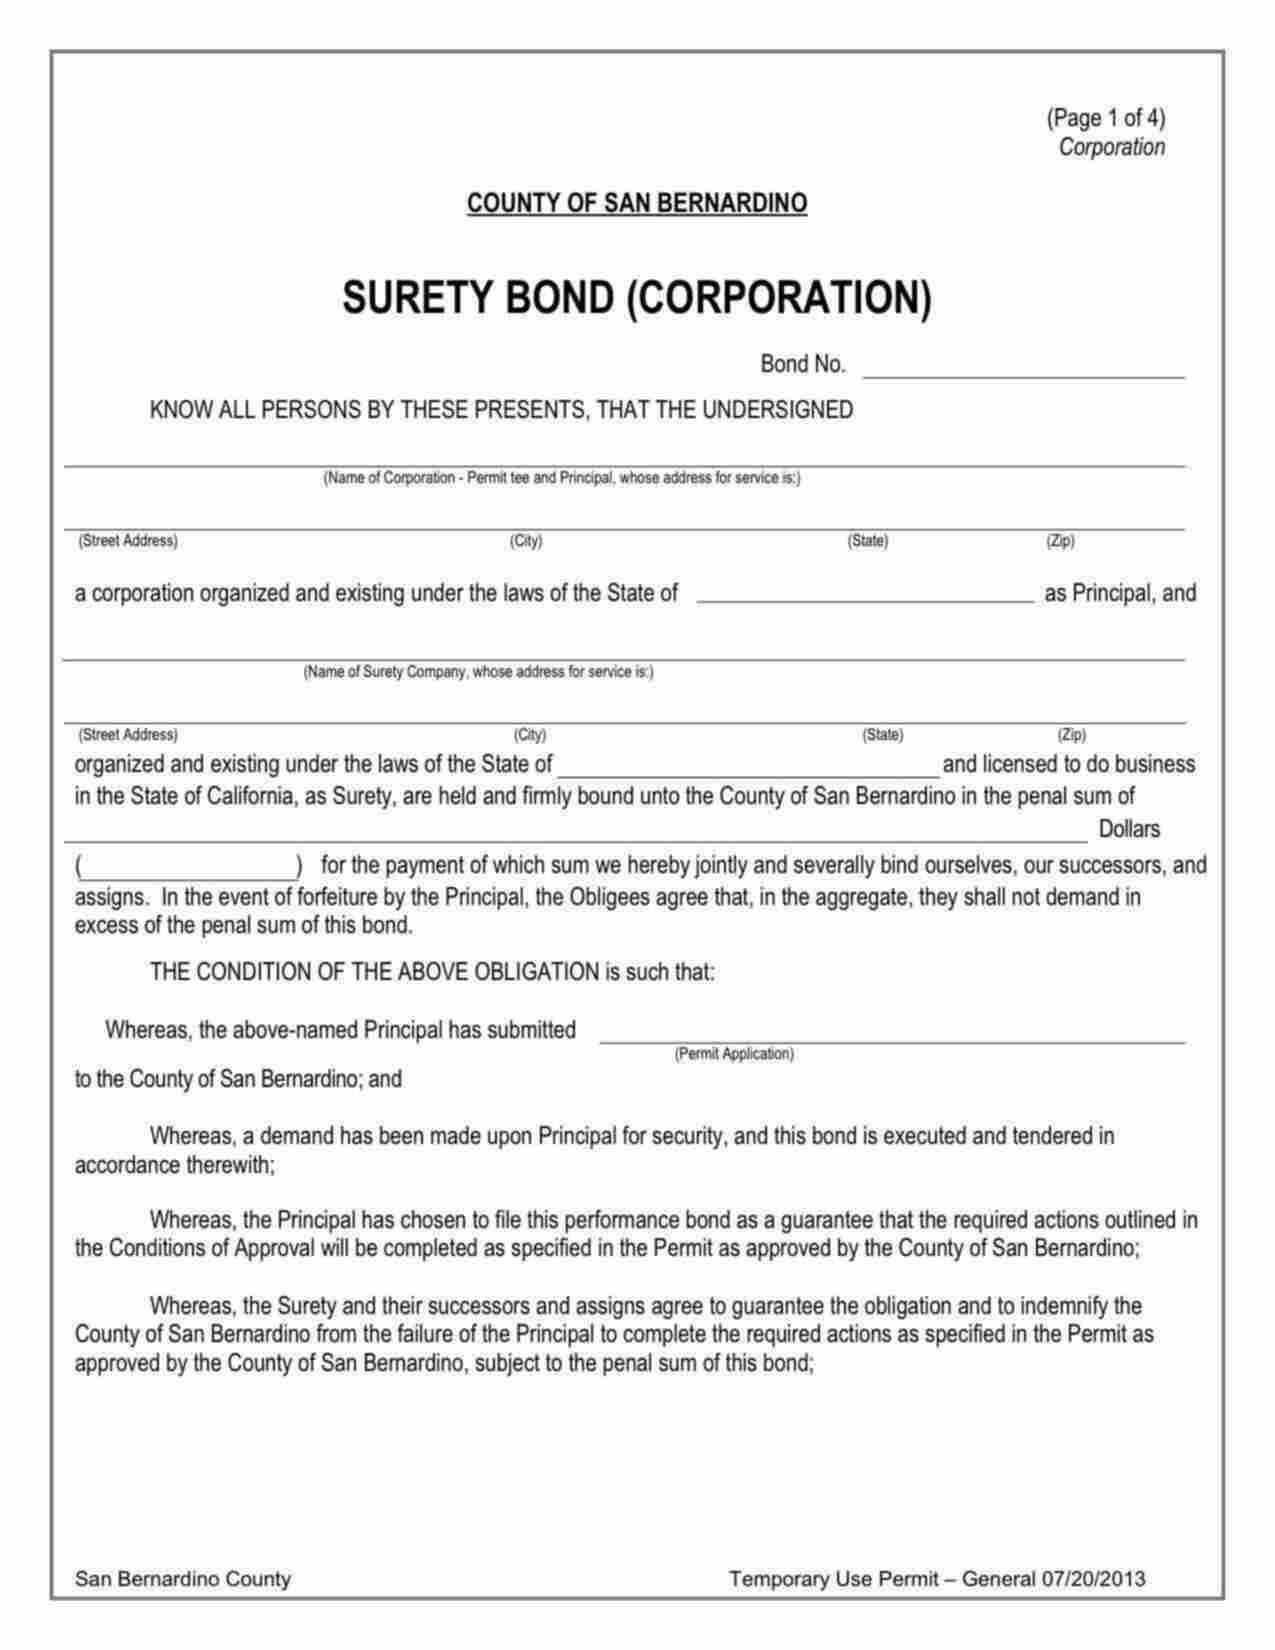 California Temporary Use Permit Bond Form